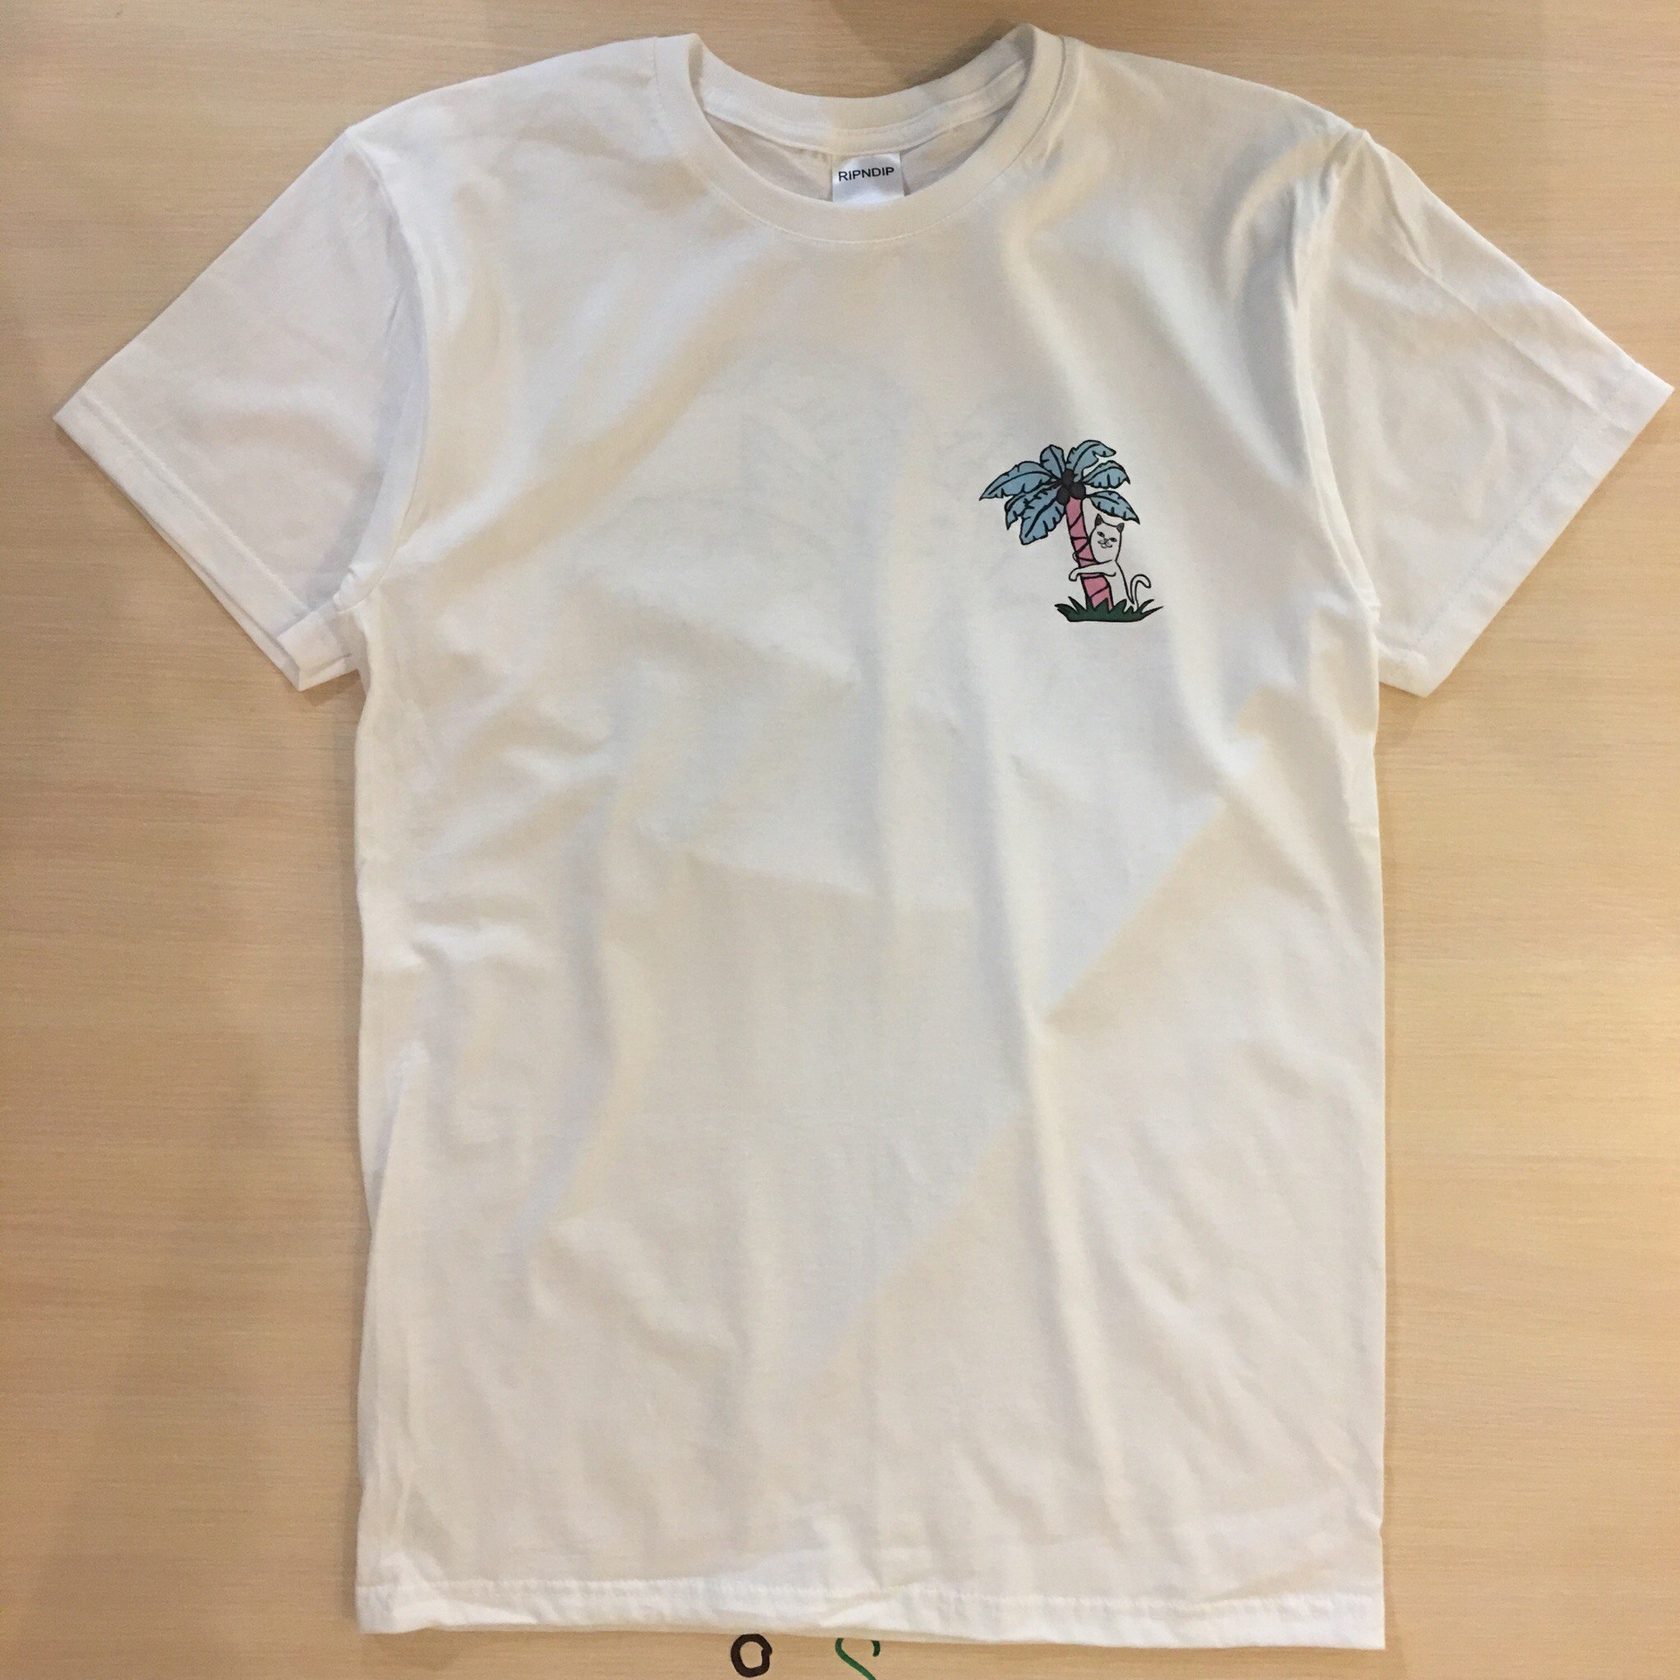 Футболка Givenchy с Иисусом. Киттон рубашка копия. Реплика футболки